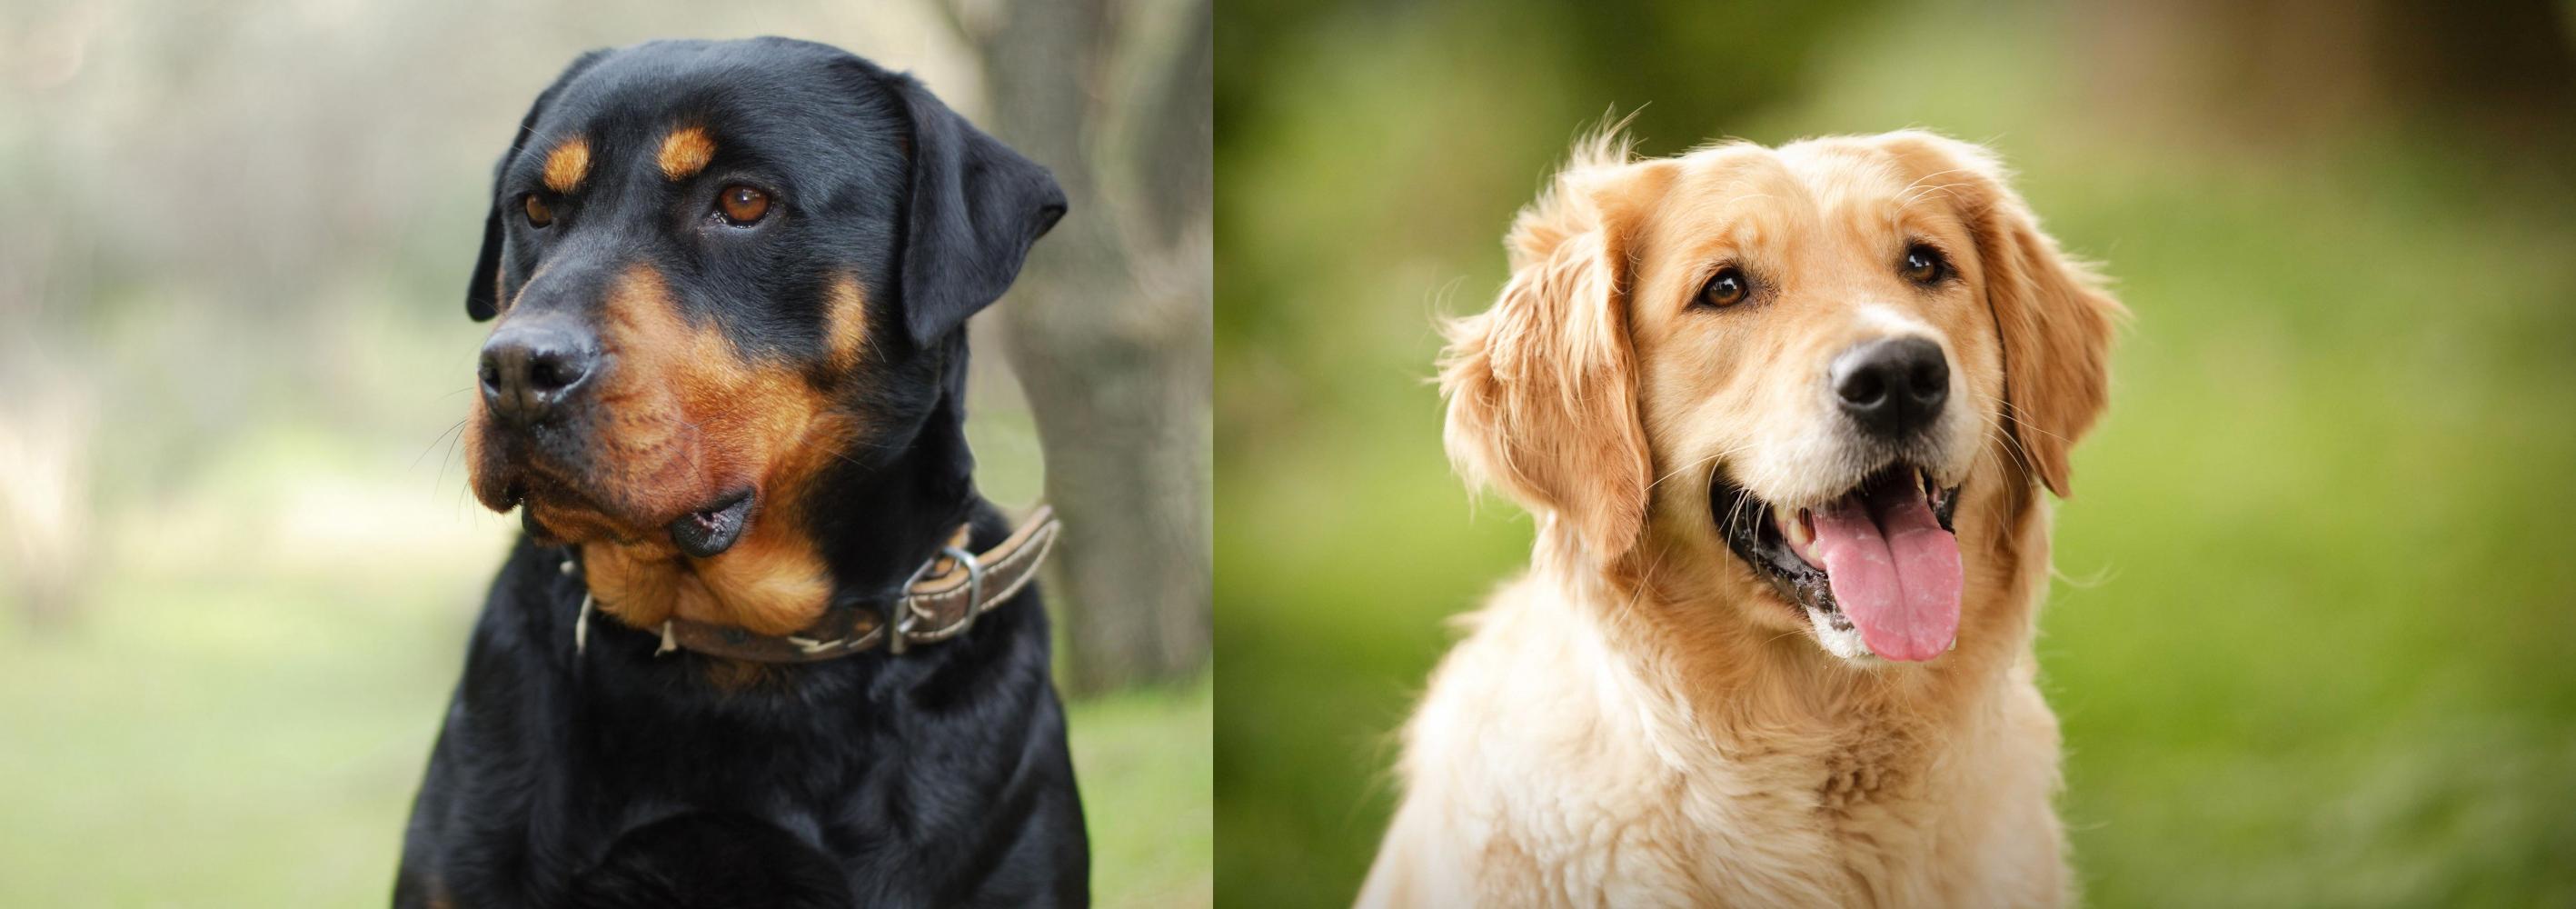 Rottweiler vs Golden Retriever - Breed 